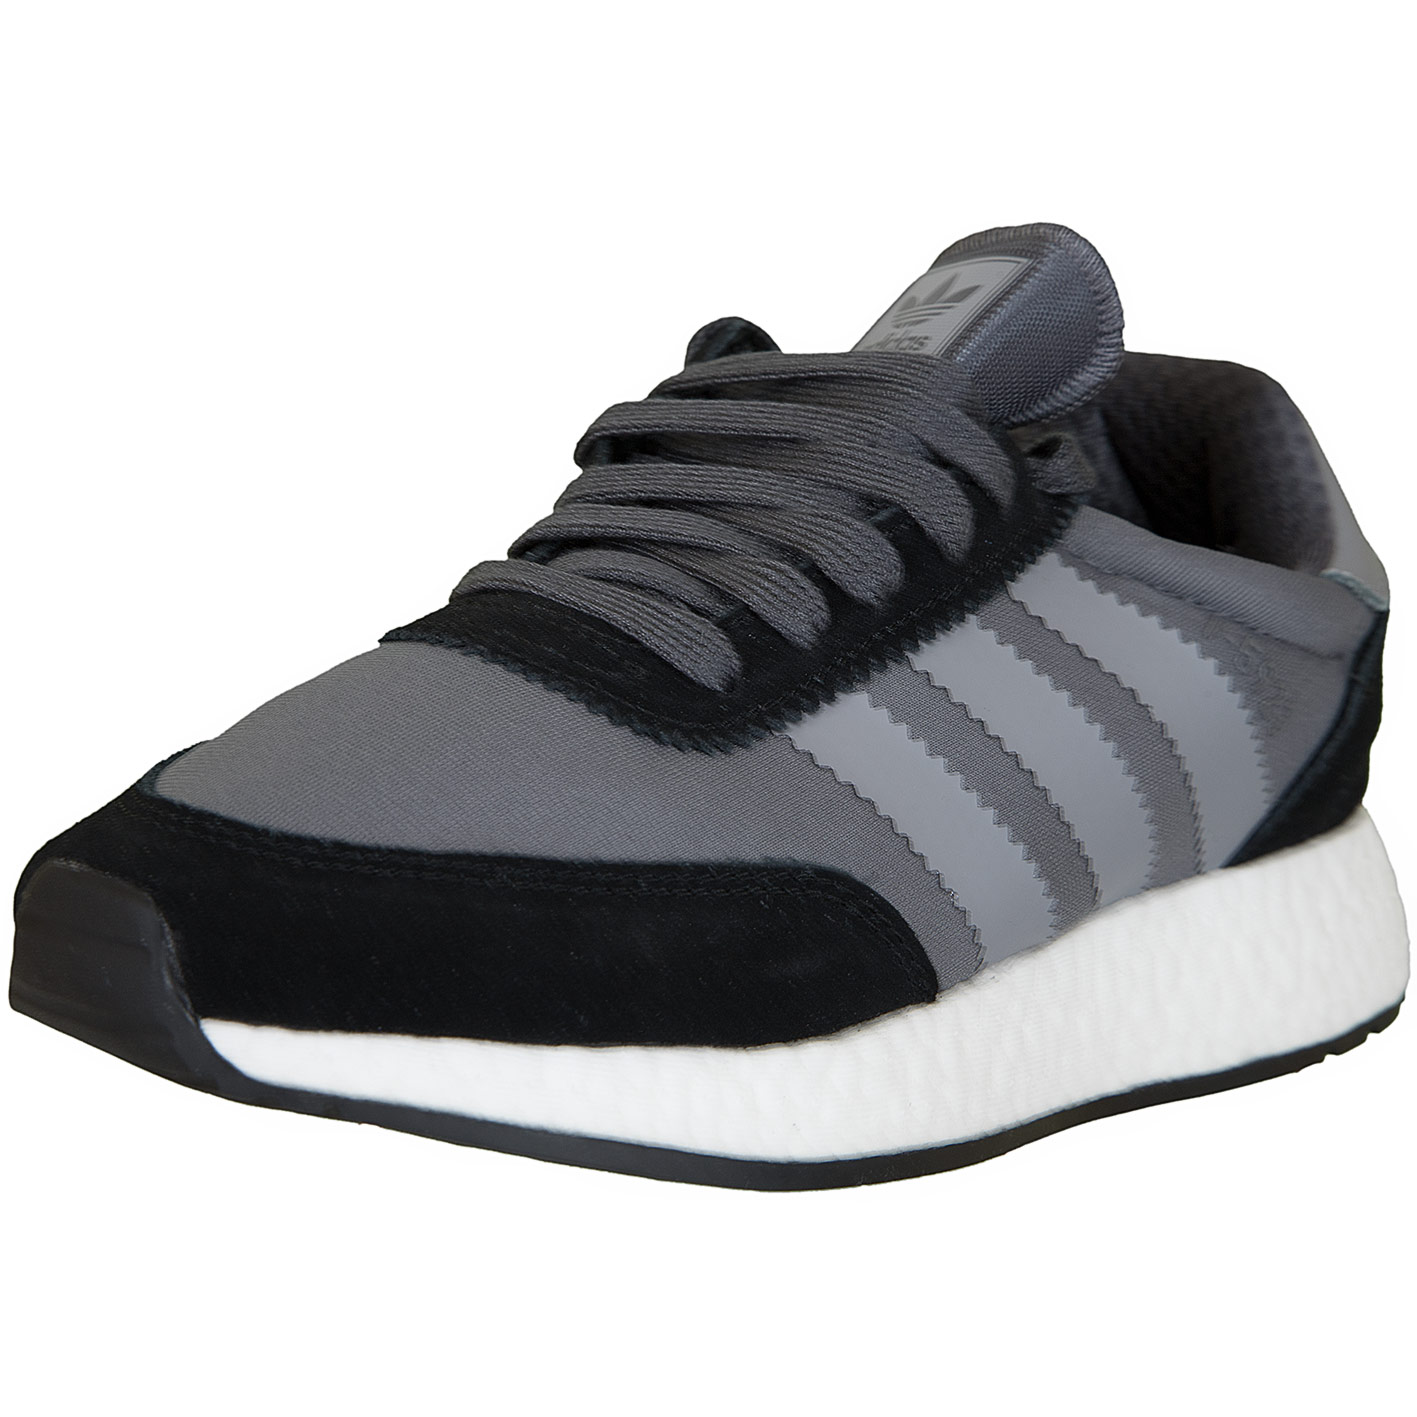 ☆ Adidas Originals Damen Sneaker I-5923 schwarz/grau - hier bestellen!